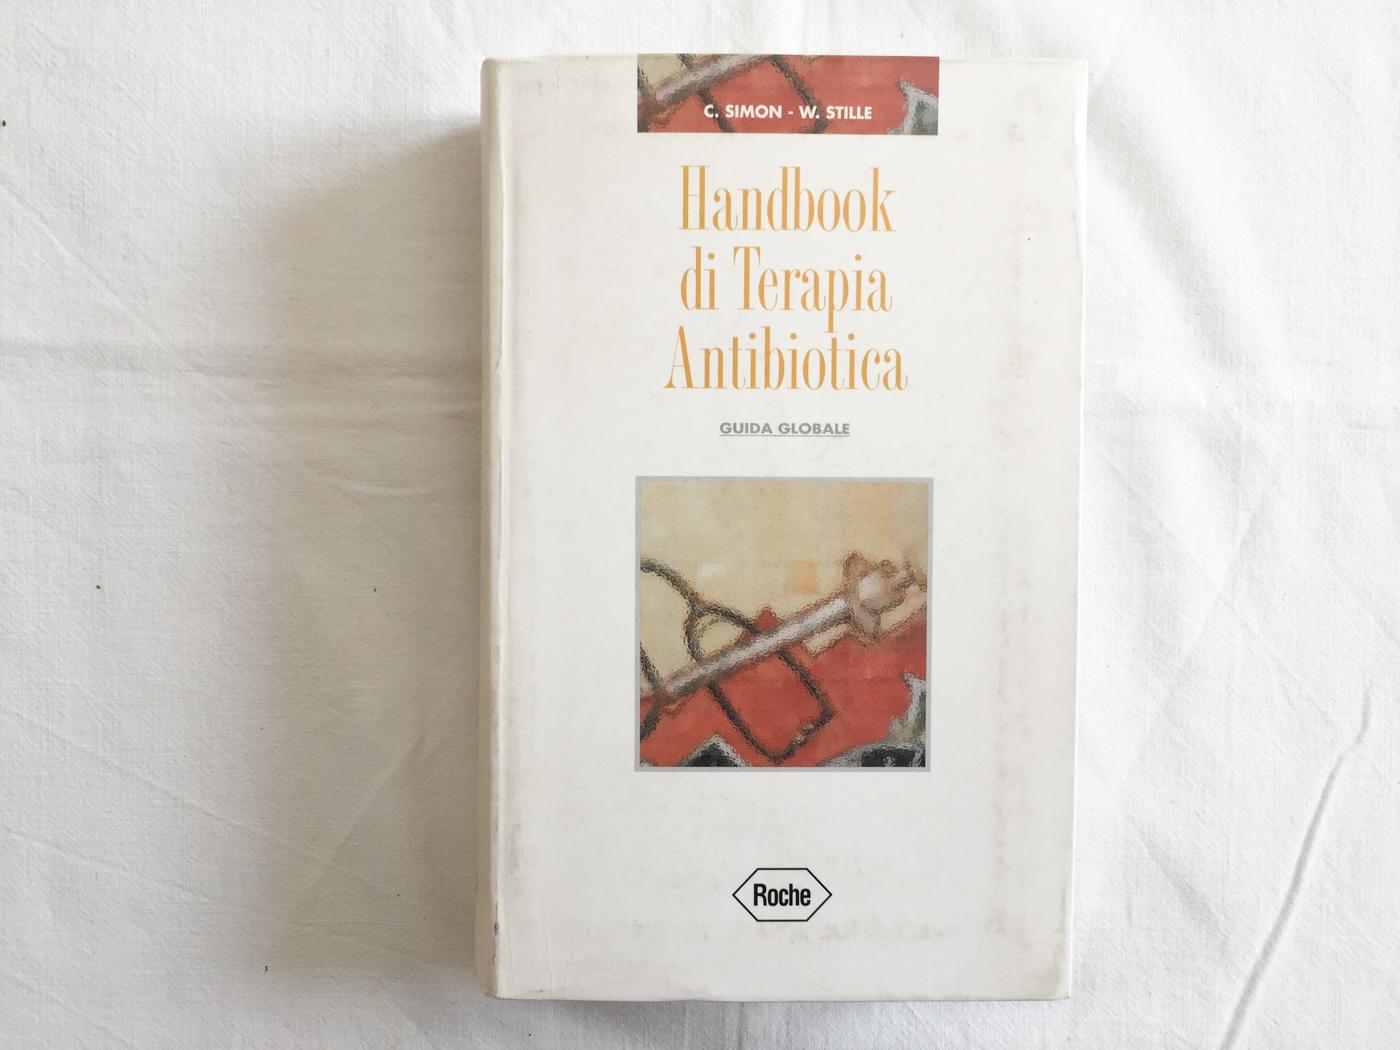 Handbook di terapia antibiotica. Guida globale - Simon, C. - Stille, W.